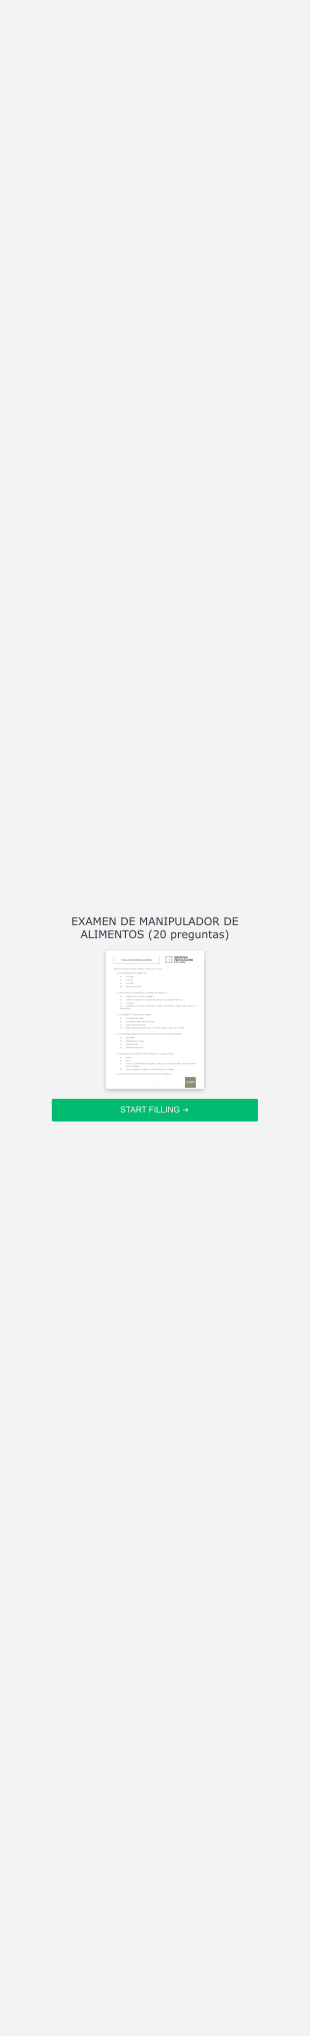 EXAMEN DE MANIPULADOR DE ALIMENTOS (20 Preguntas) Form Template